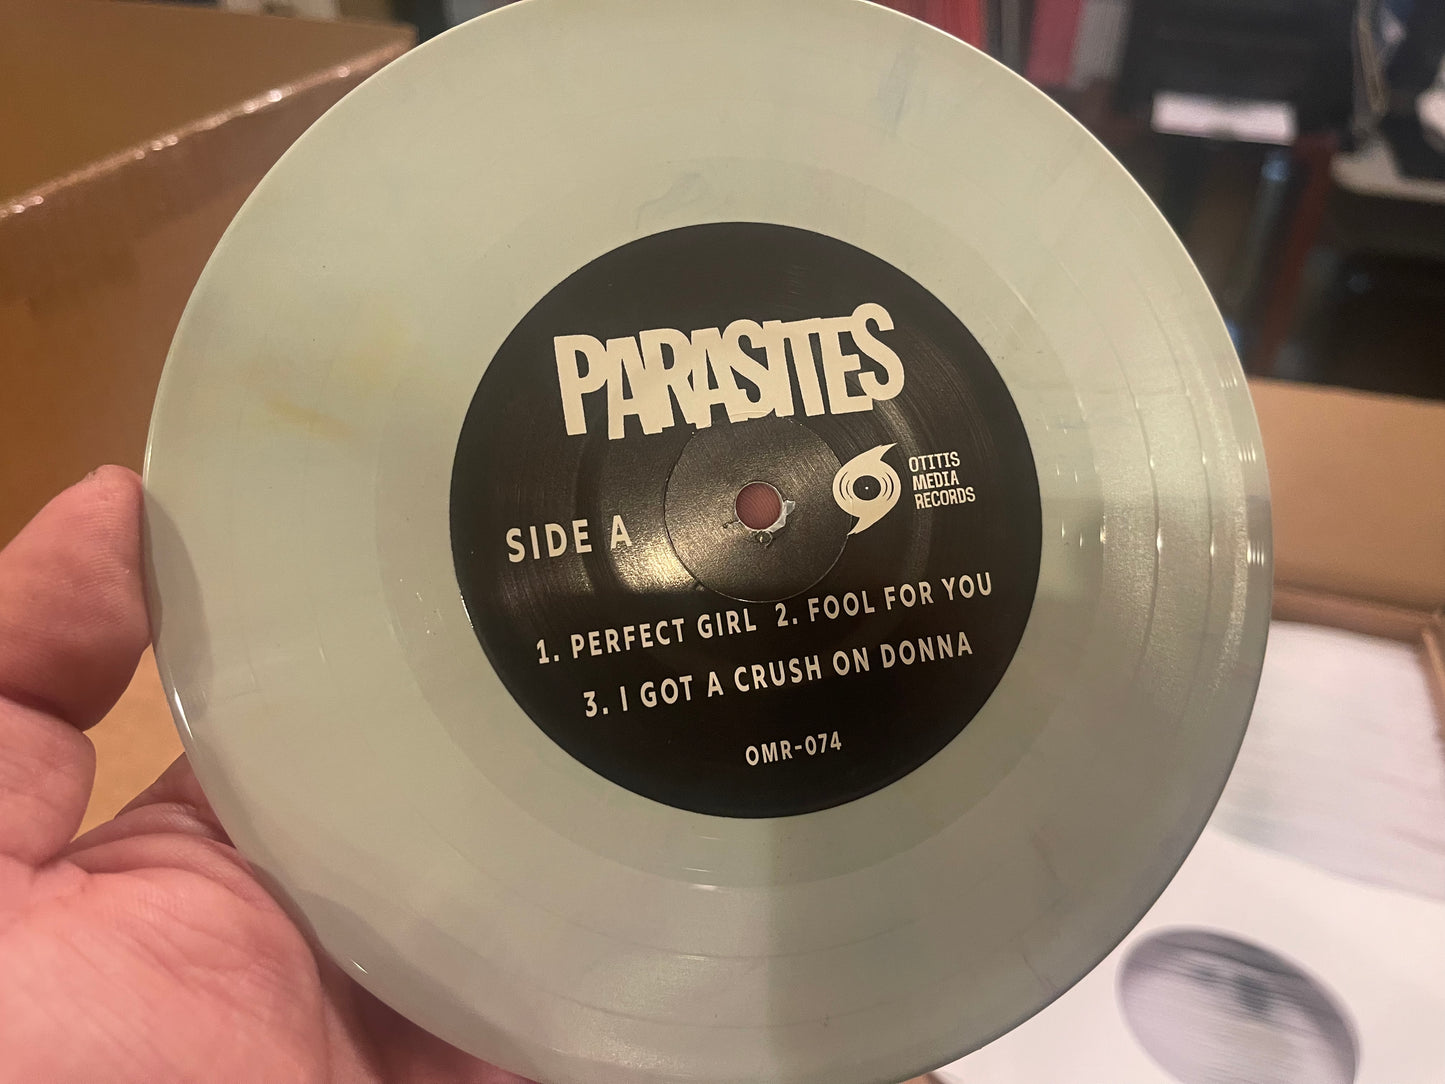 OMR-074 PARASITES “EP-onymous” 7 inch Vinyl (Random Colored)